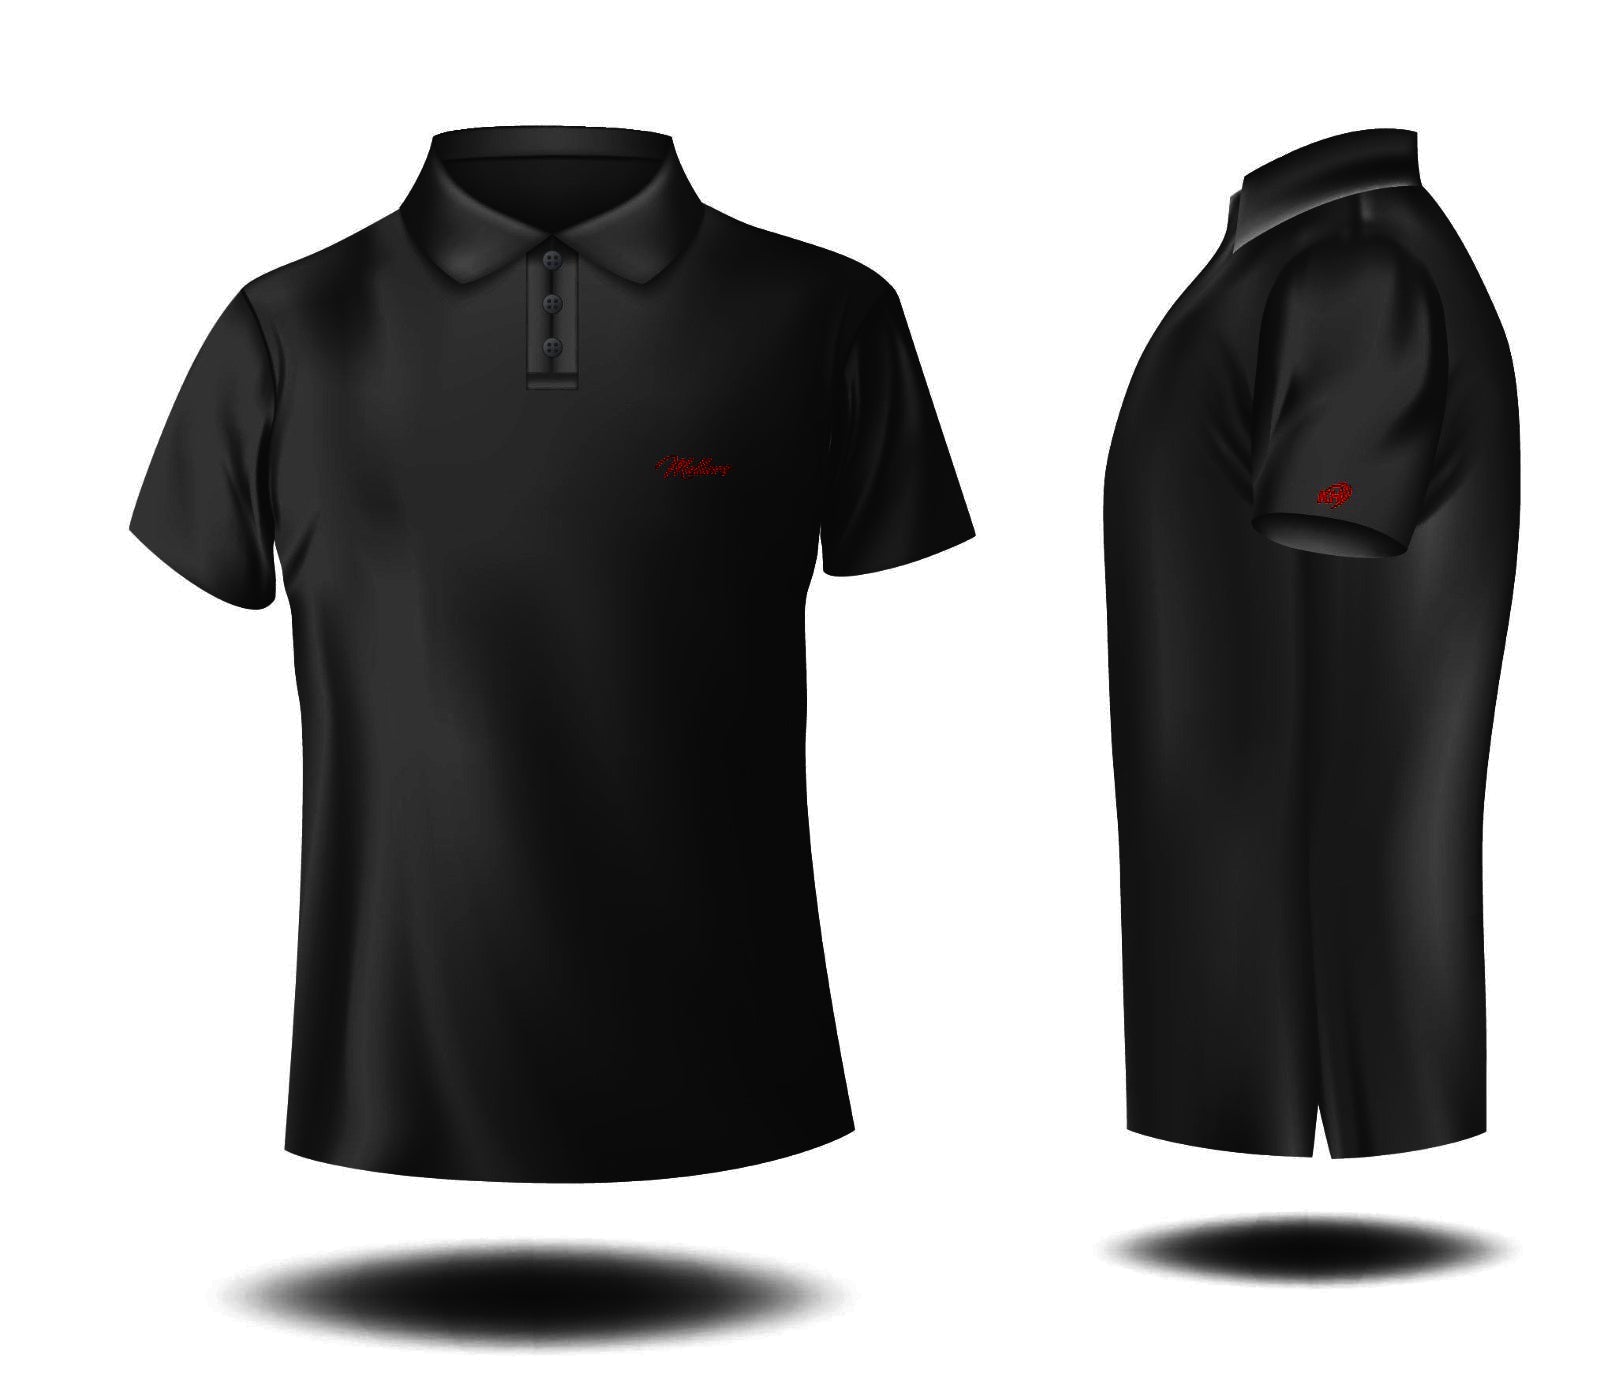 Black polo shirt printed by KHM brand